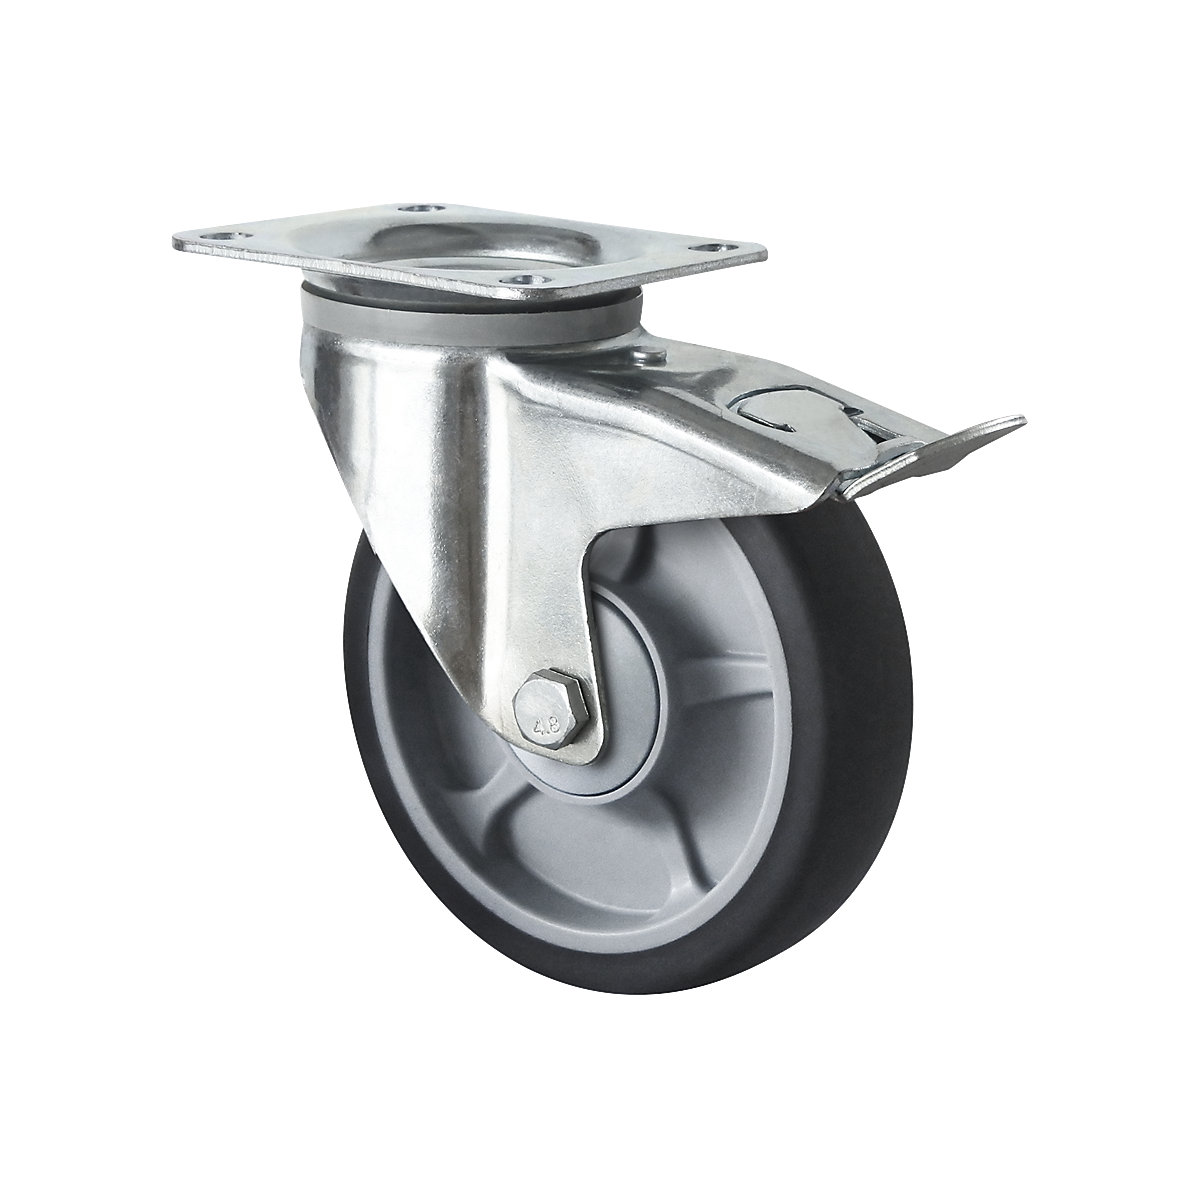 EUROKRAFTbasic – TPE tyres on PP rim, 2+ items, wheel Ø x width 200 x 40 mm, swivel castor with double stop